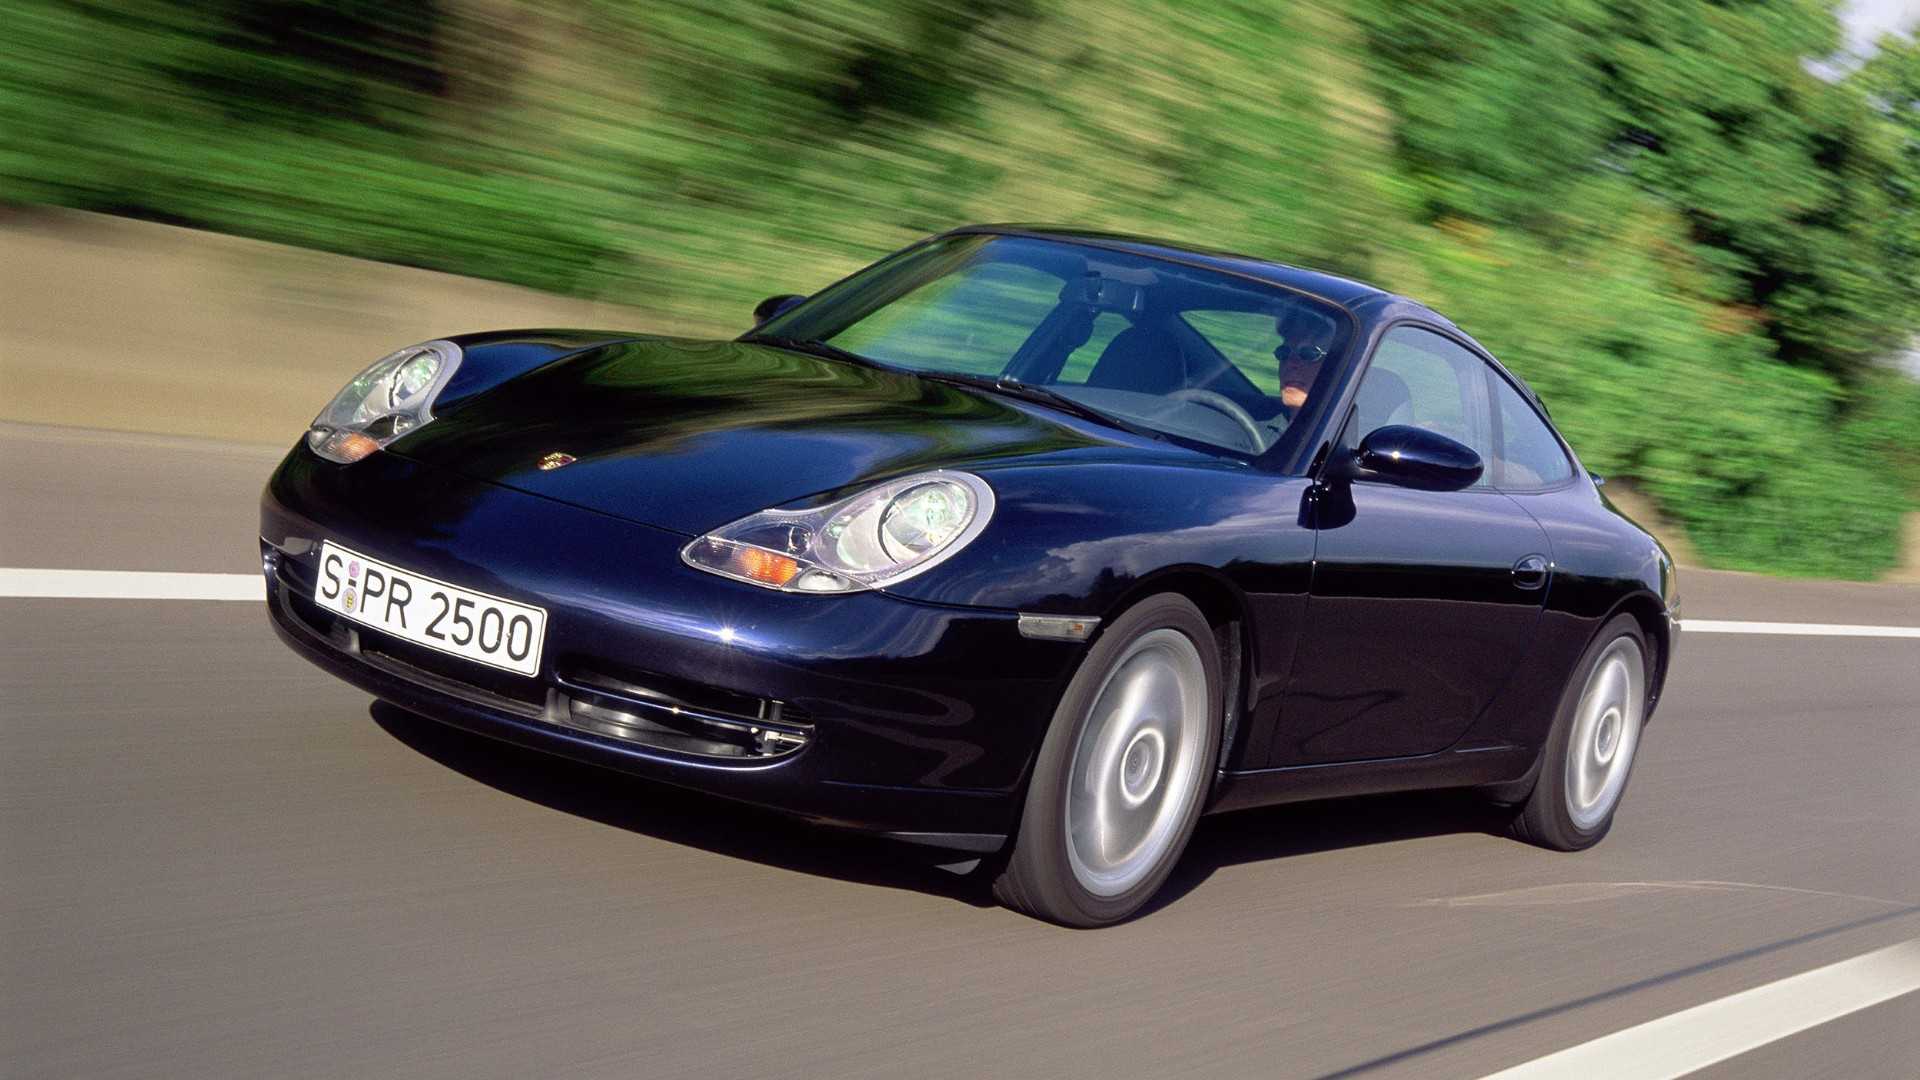 Porsche 911 (996) - The Story